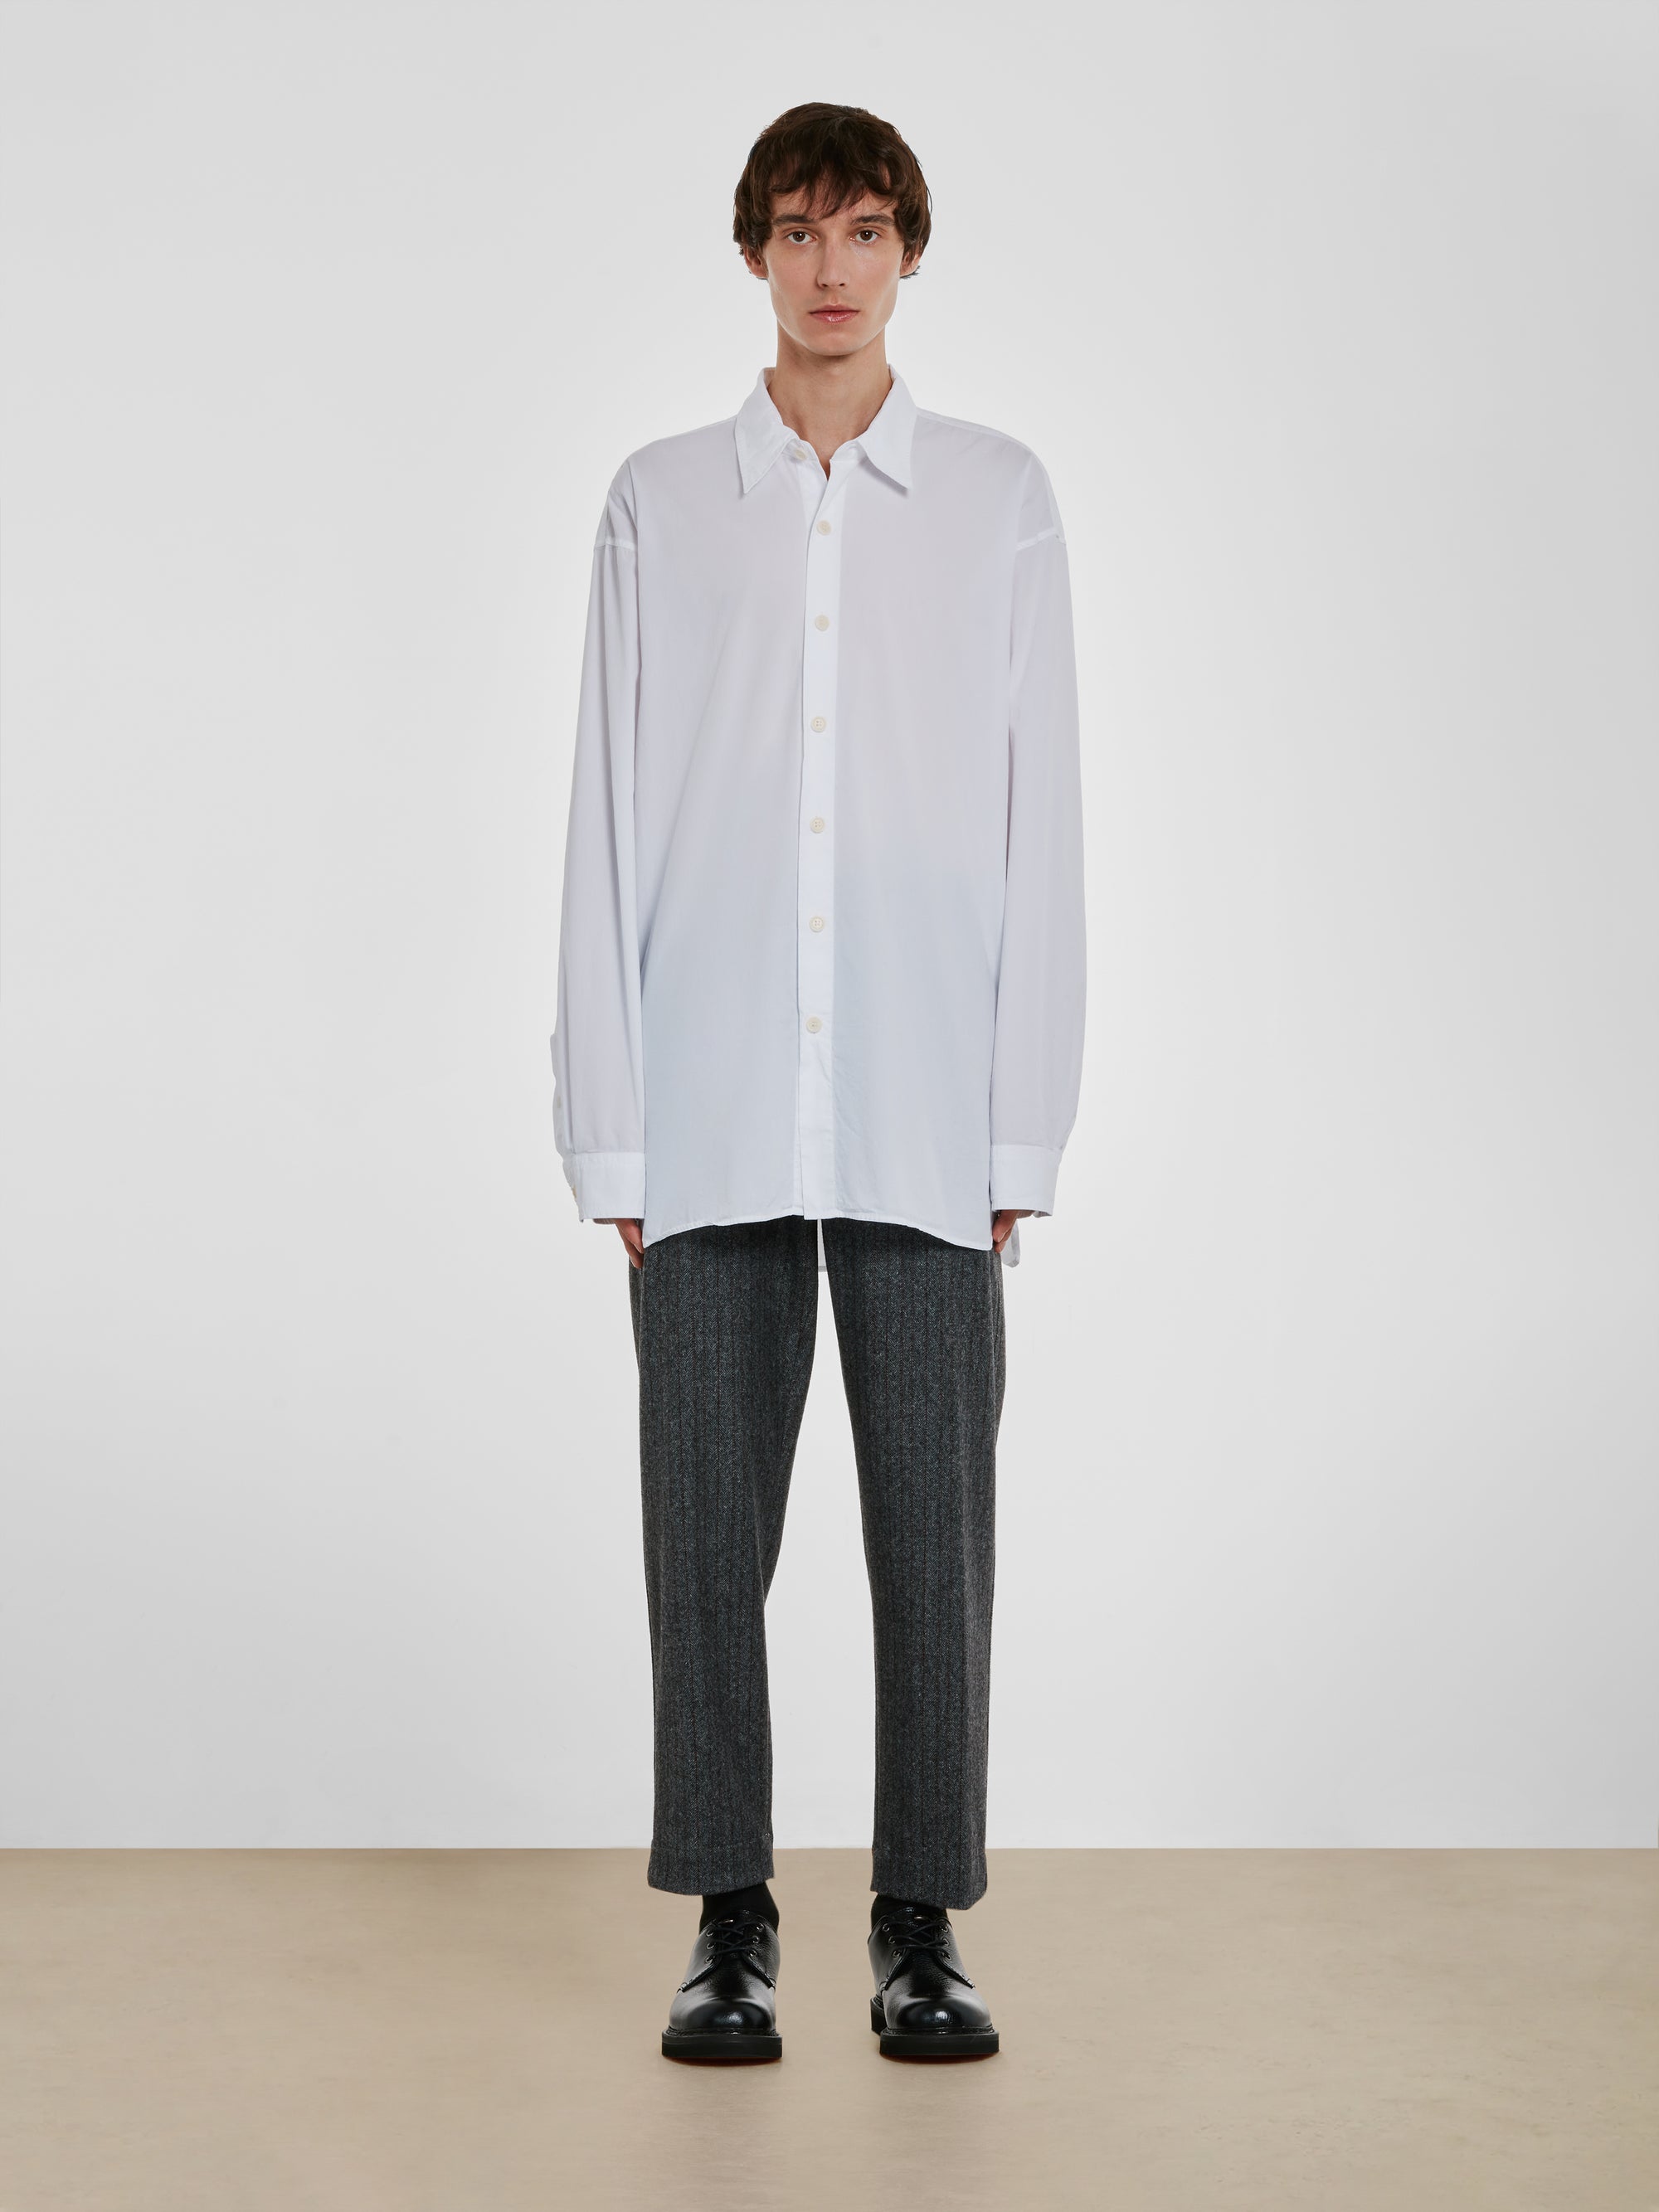 Dries Van Noten - Men’s Boxy Fit Shirt - (White) view 5